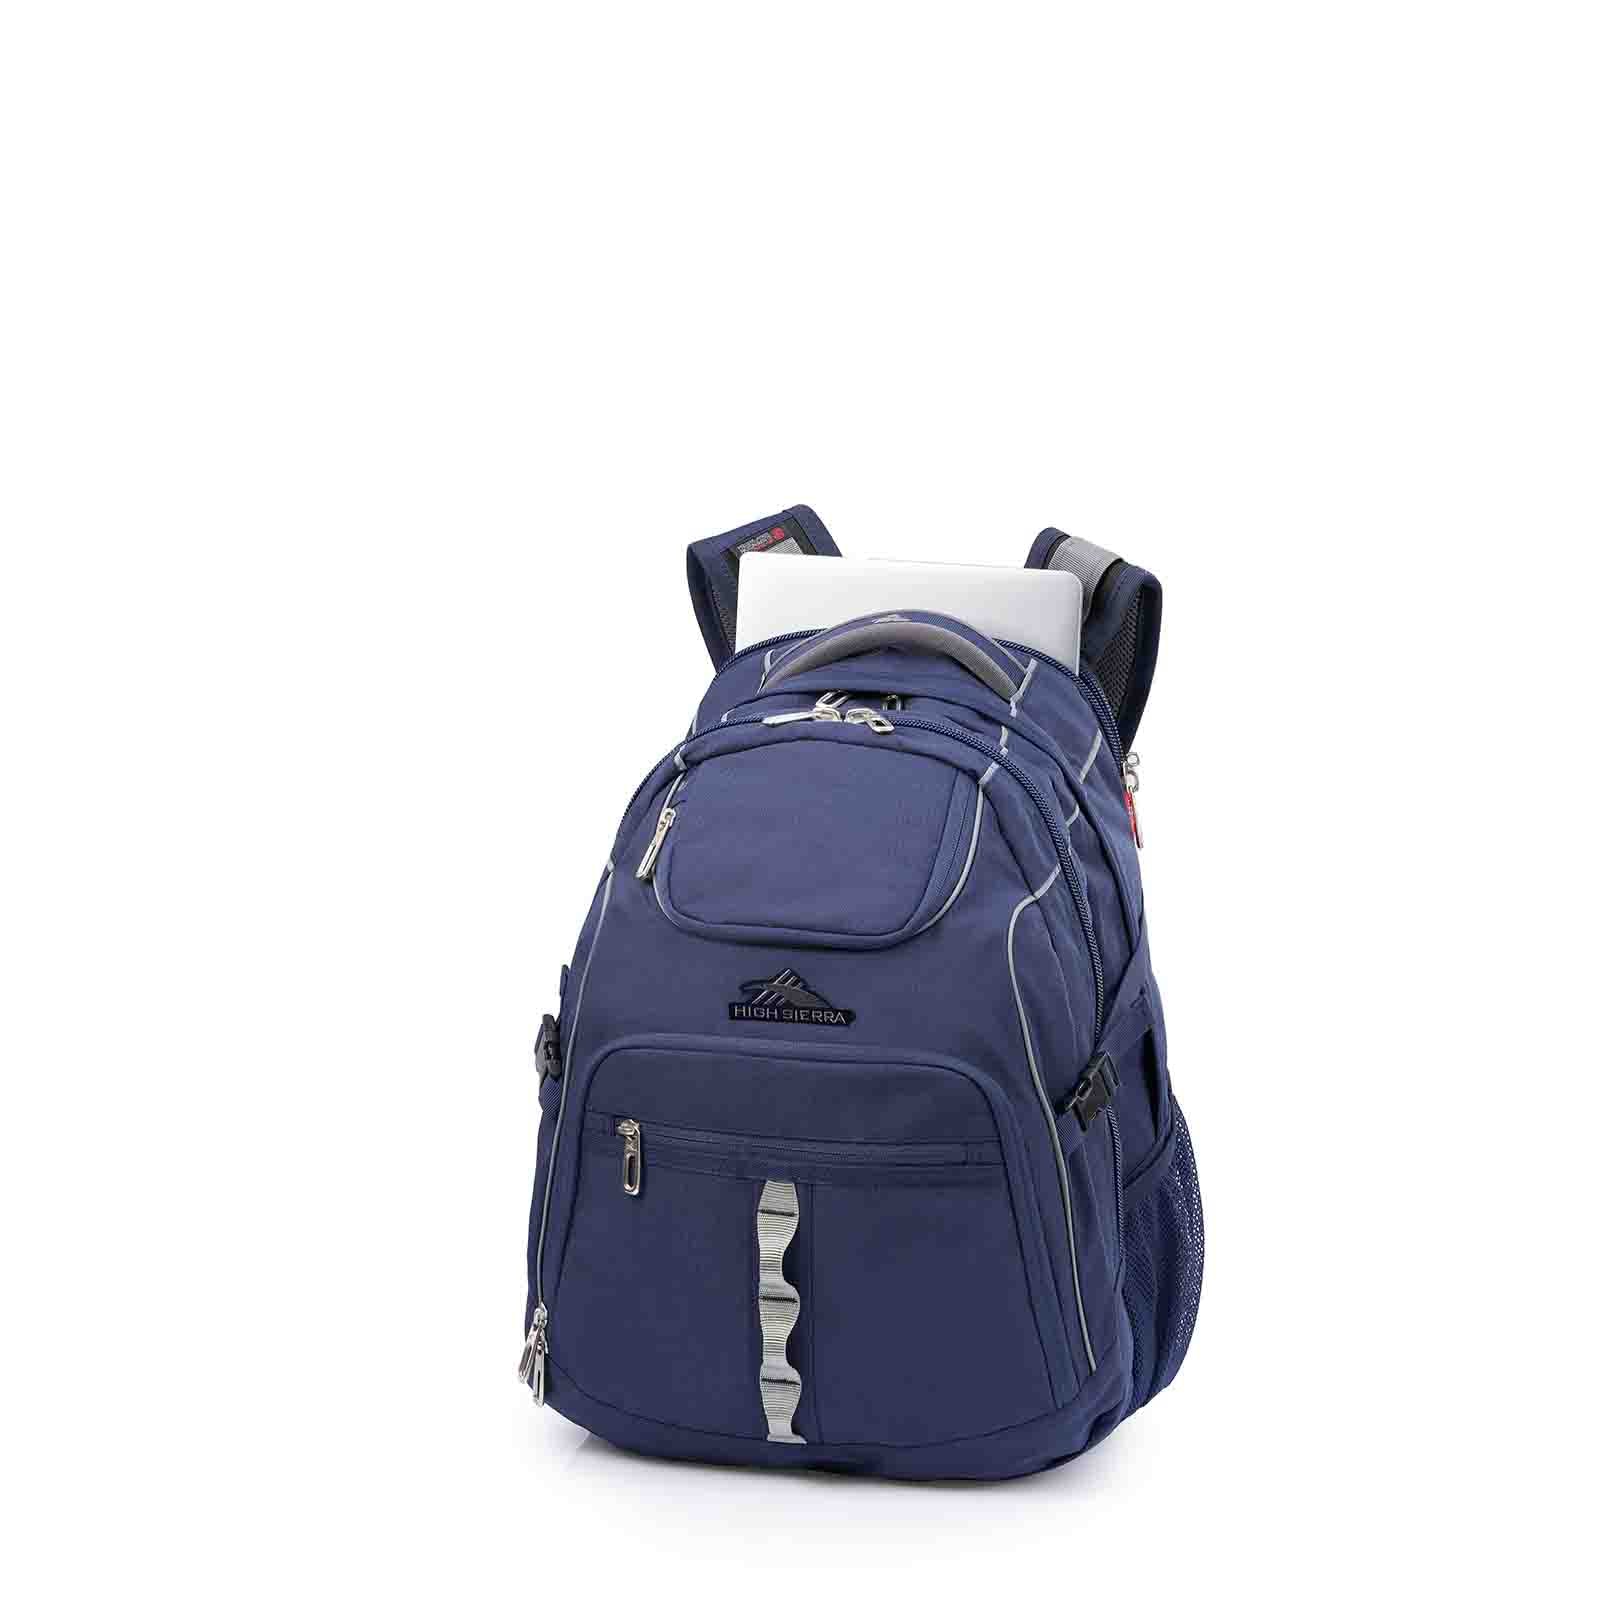 High-Sierra-Access-3-Eco-16-Inch-Laptop-Backpack-Marine-Blue